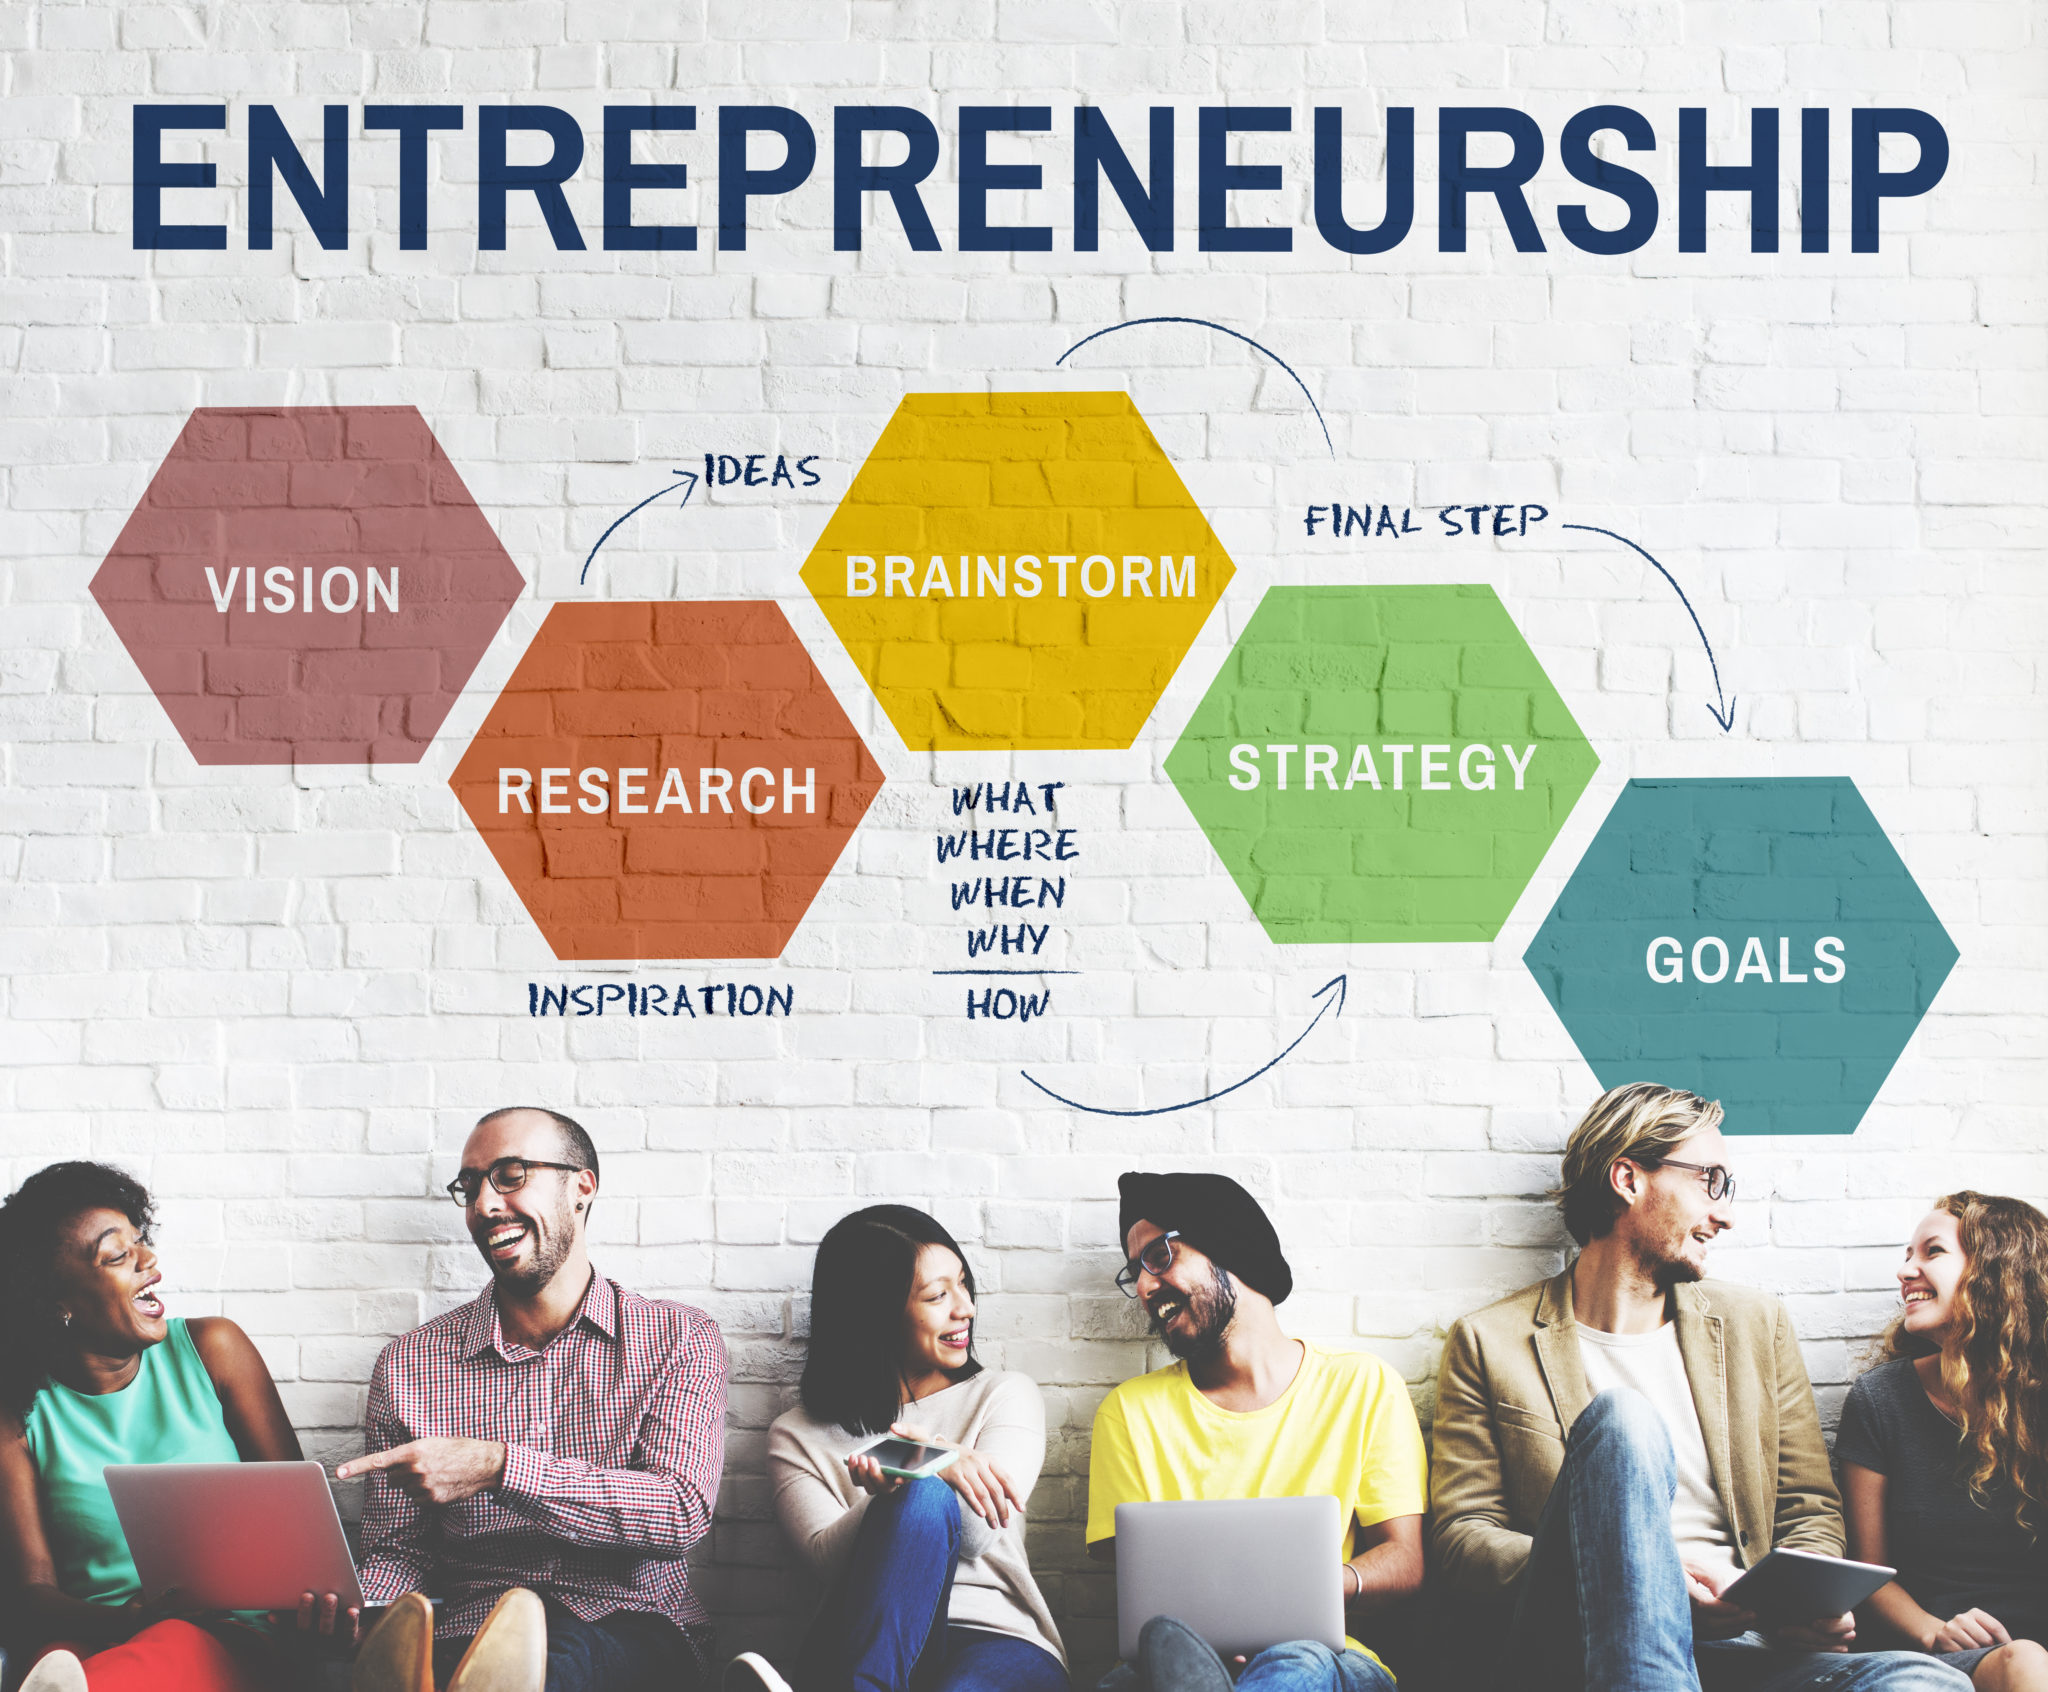 presenting business plan to investors in entrepreneurship